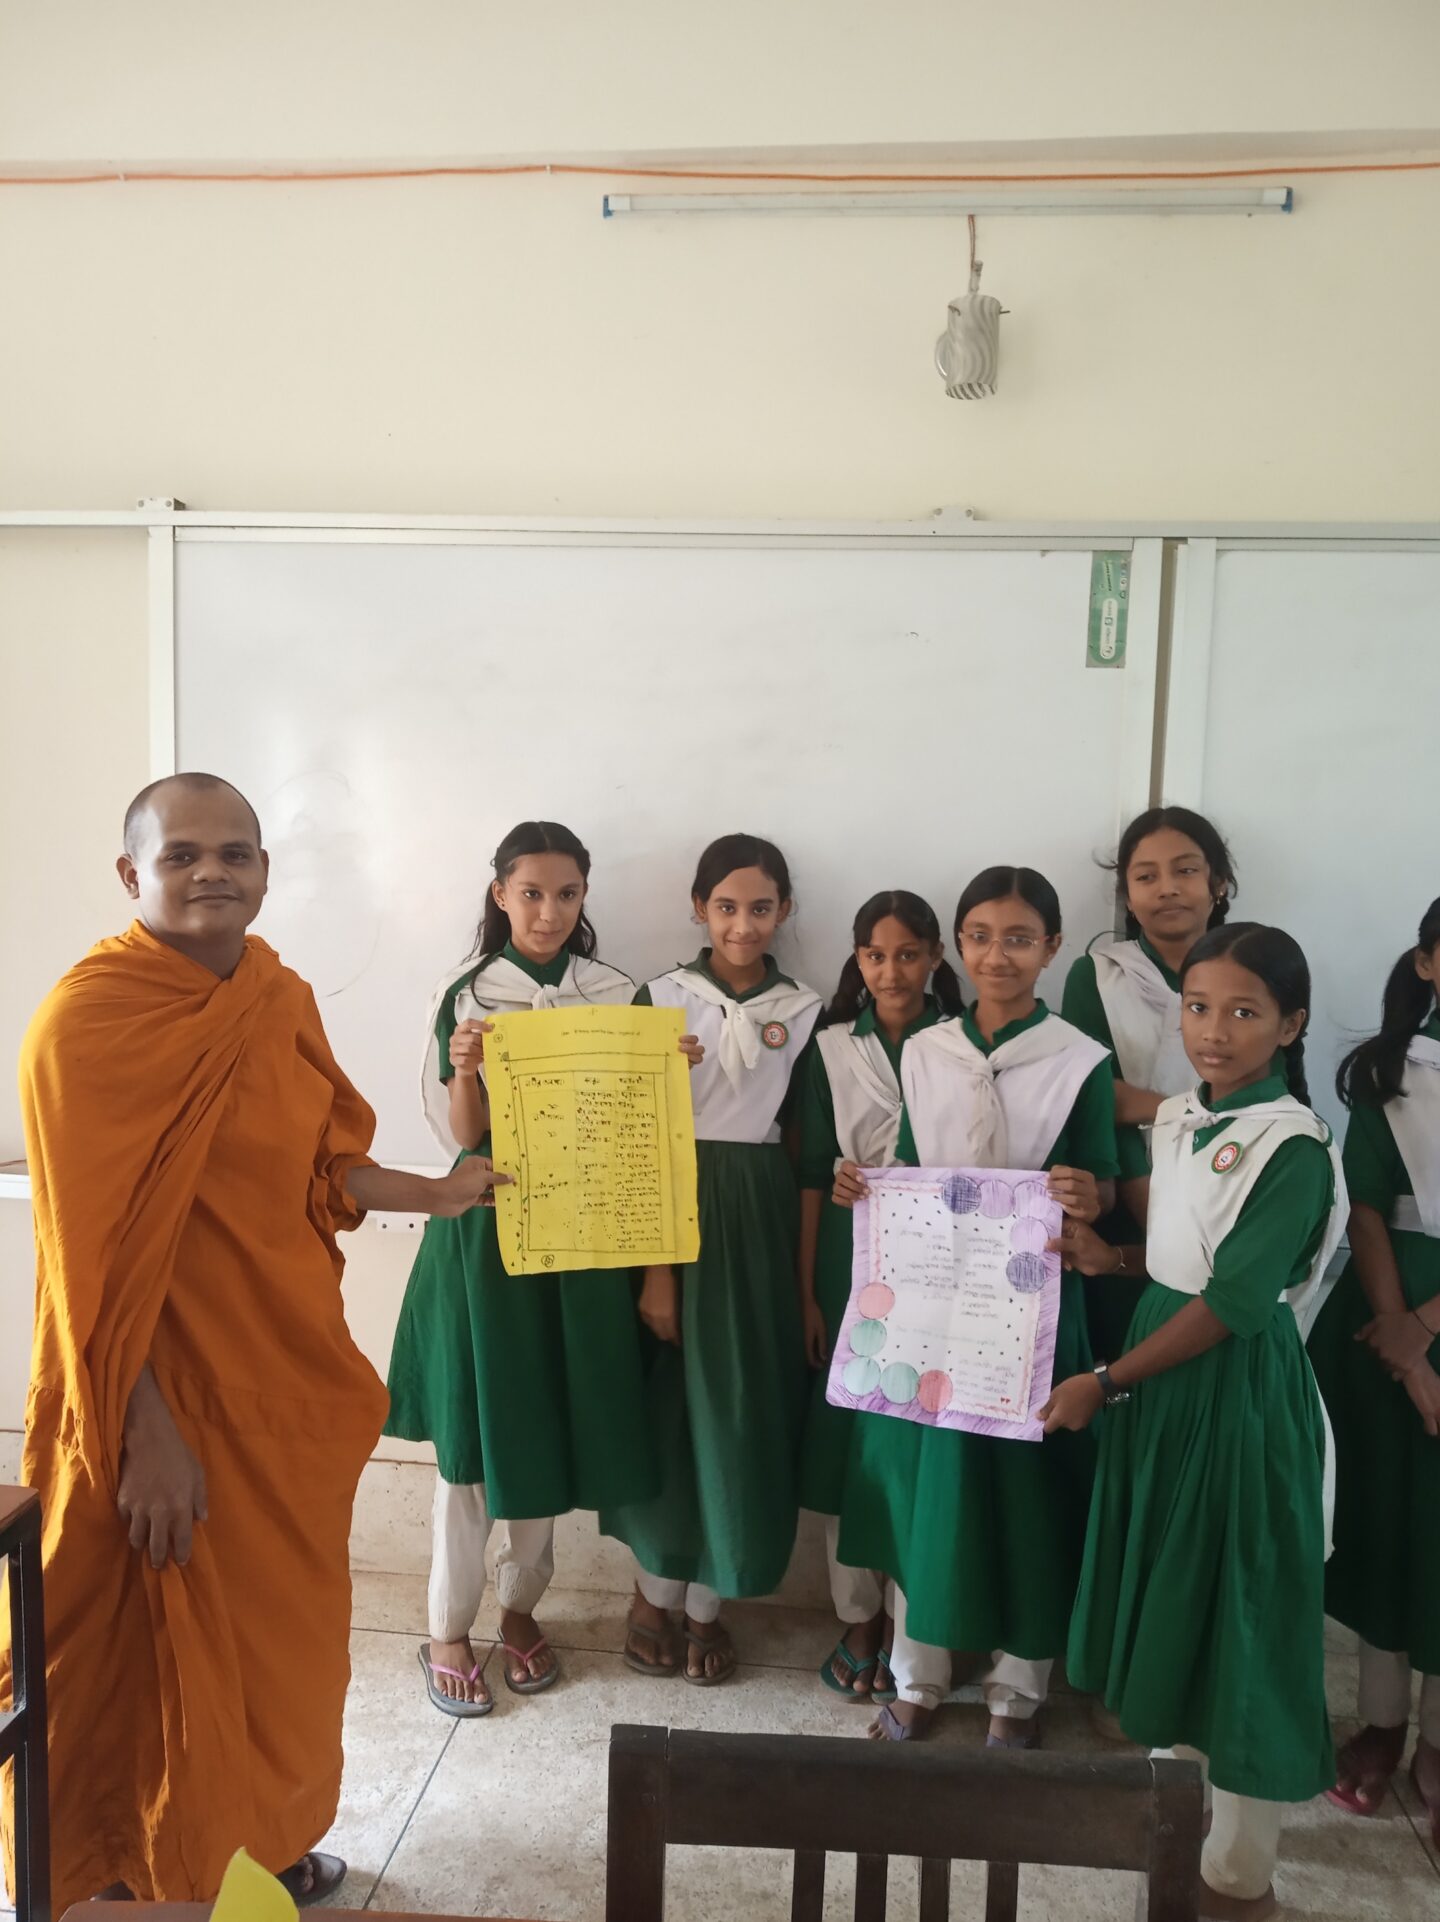 The "Green Monk" with some of his students (Photo Courtesy of Priyabangsha Bhikkhu)